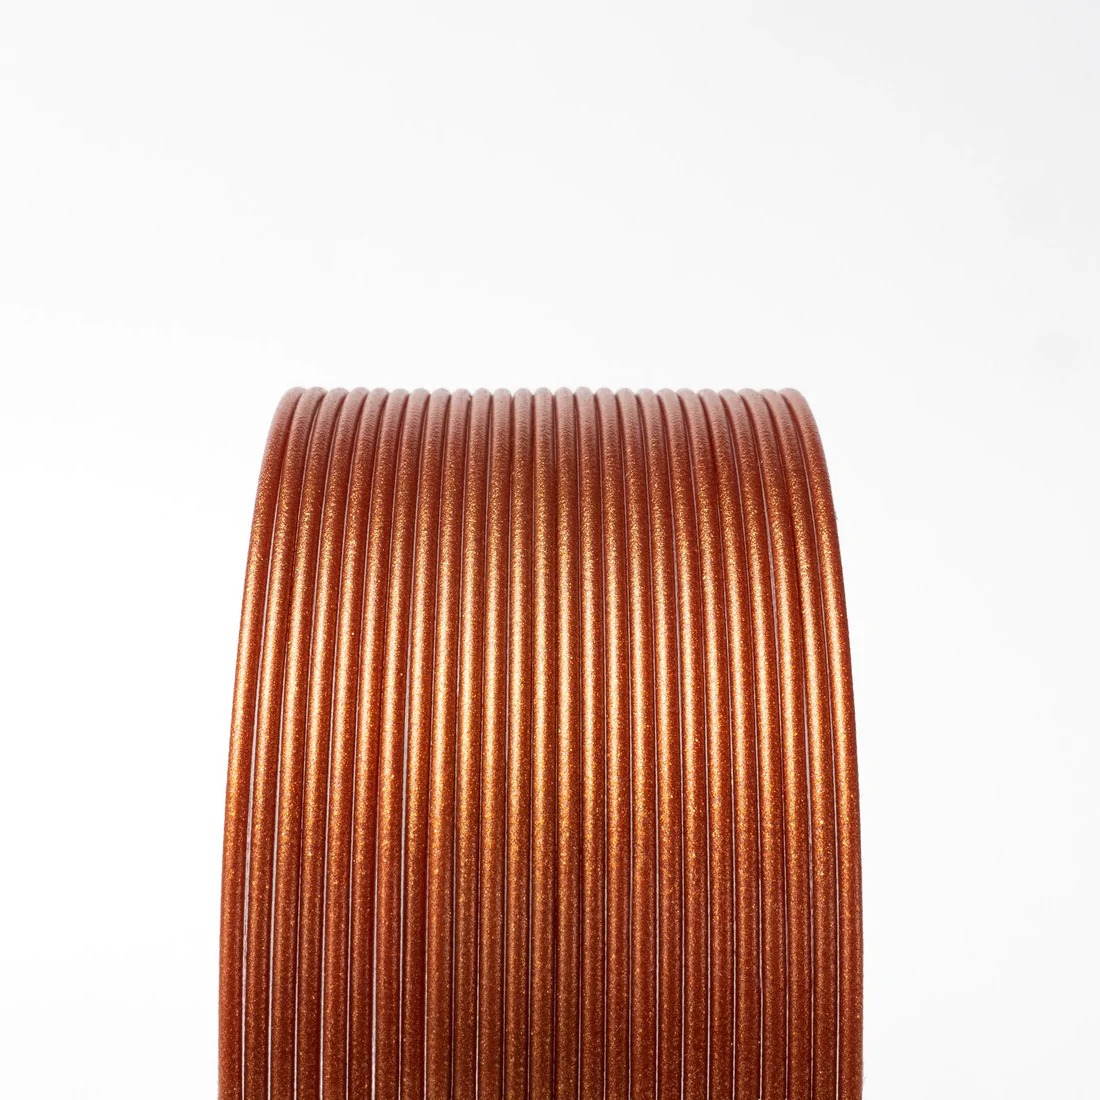 Burnt Orange Metallic Copper HTPLA  Proto-pasta 1.75mm 500gms 3D printing filament